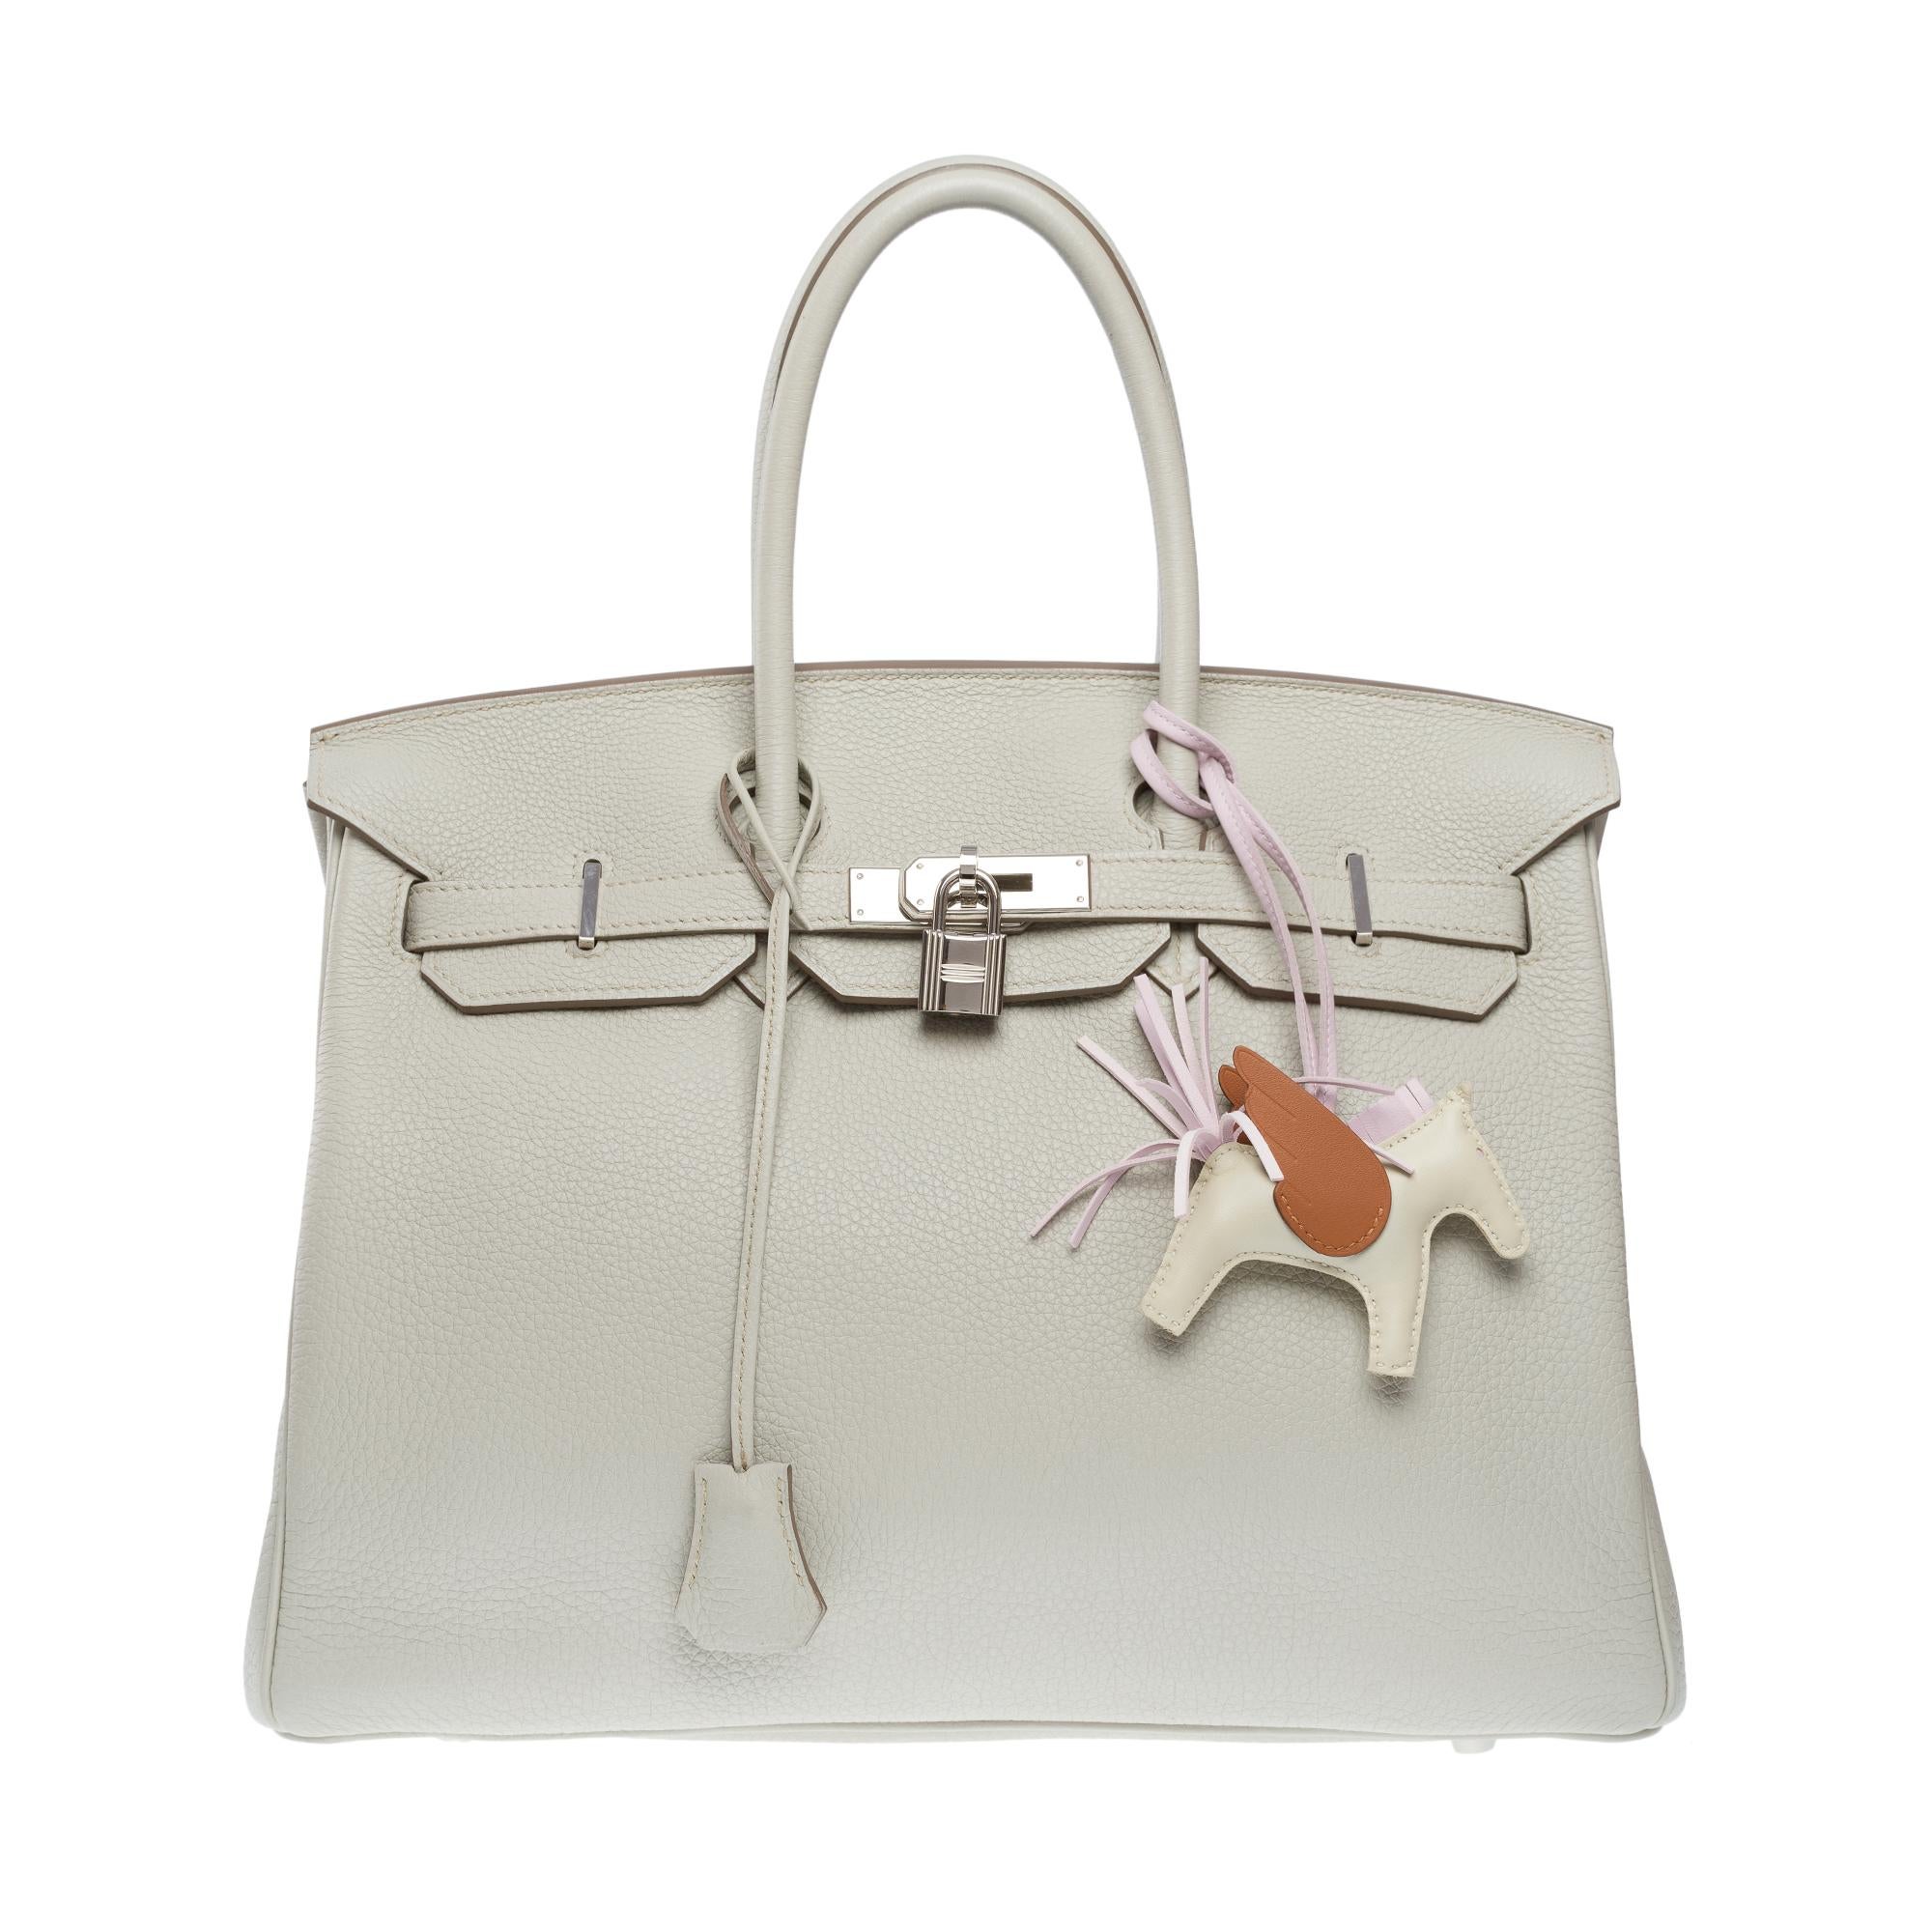 Women's or Men's Amazing Hermès Birkin 35 handbag in Gris Perle Togo Calf leather, SHW For Sale